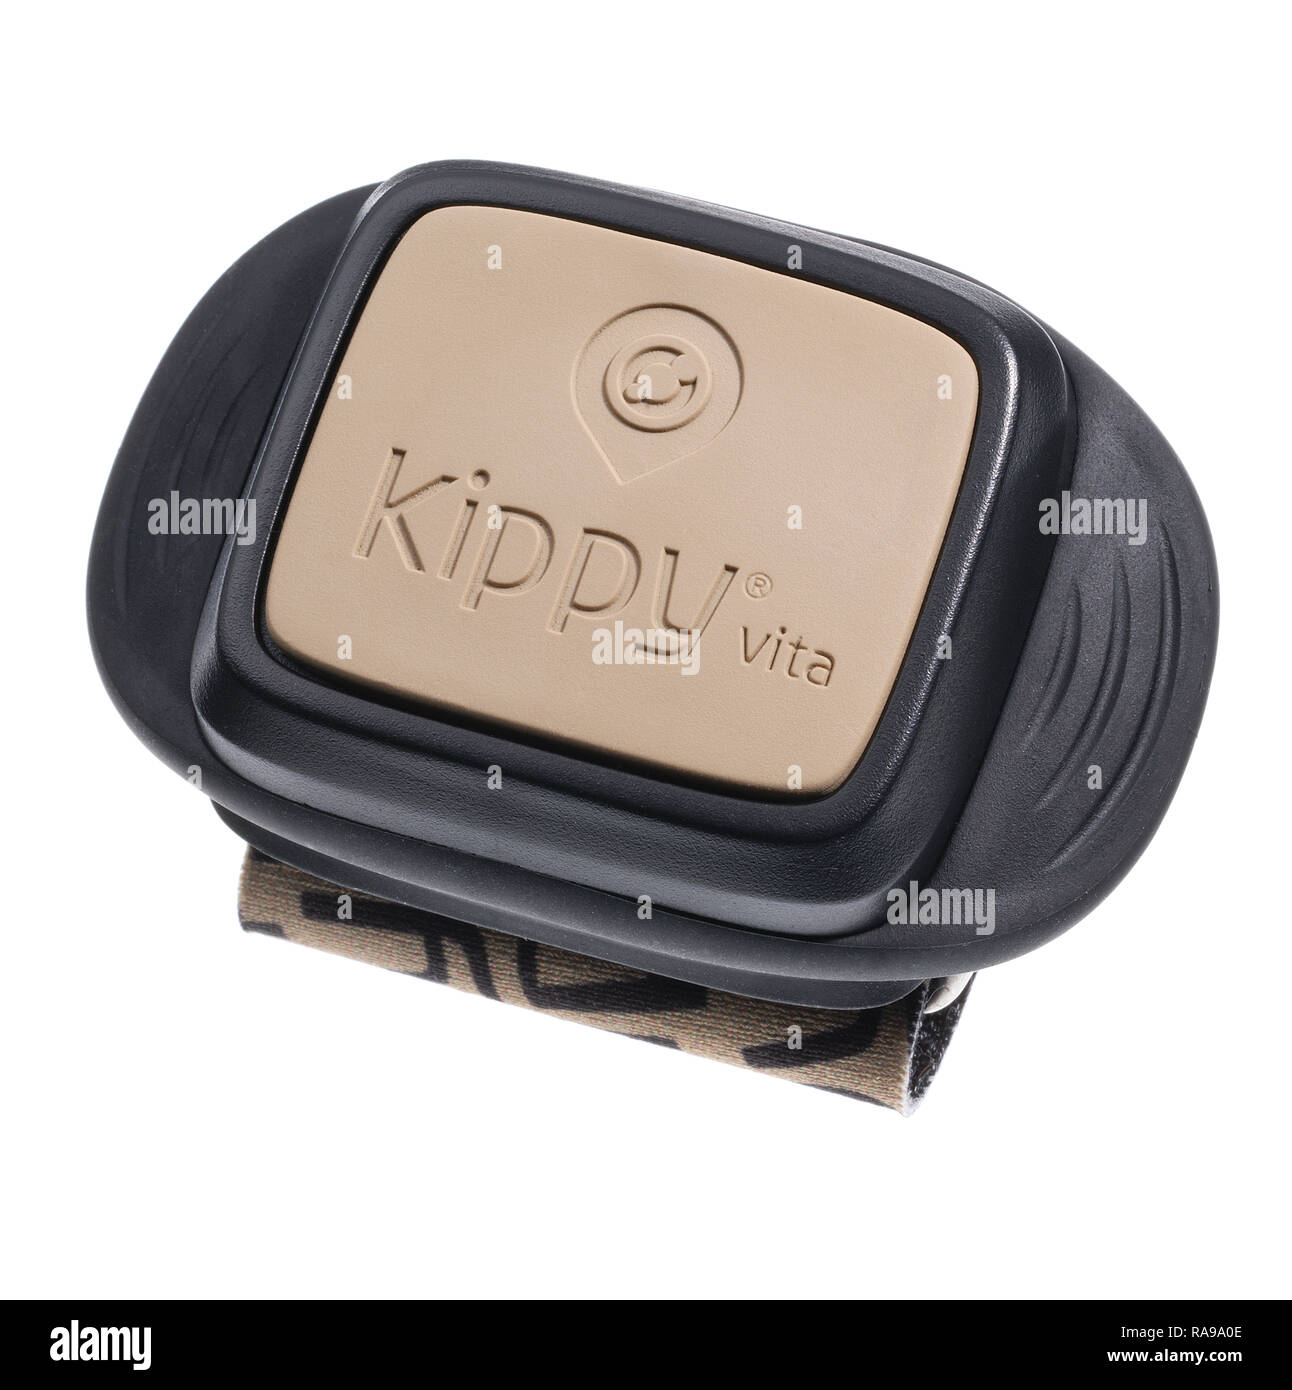 Kippy Vita pet tracker device to attach to collar. Stock Photo